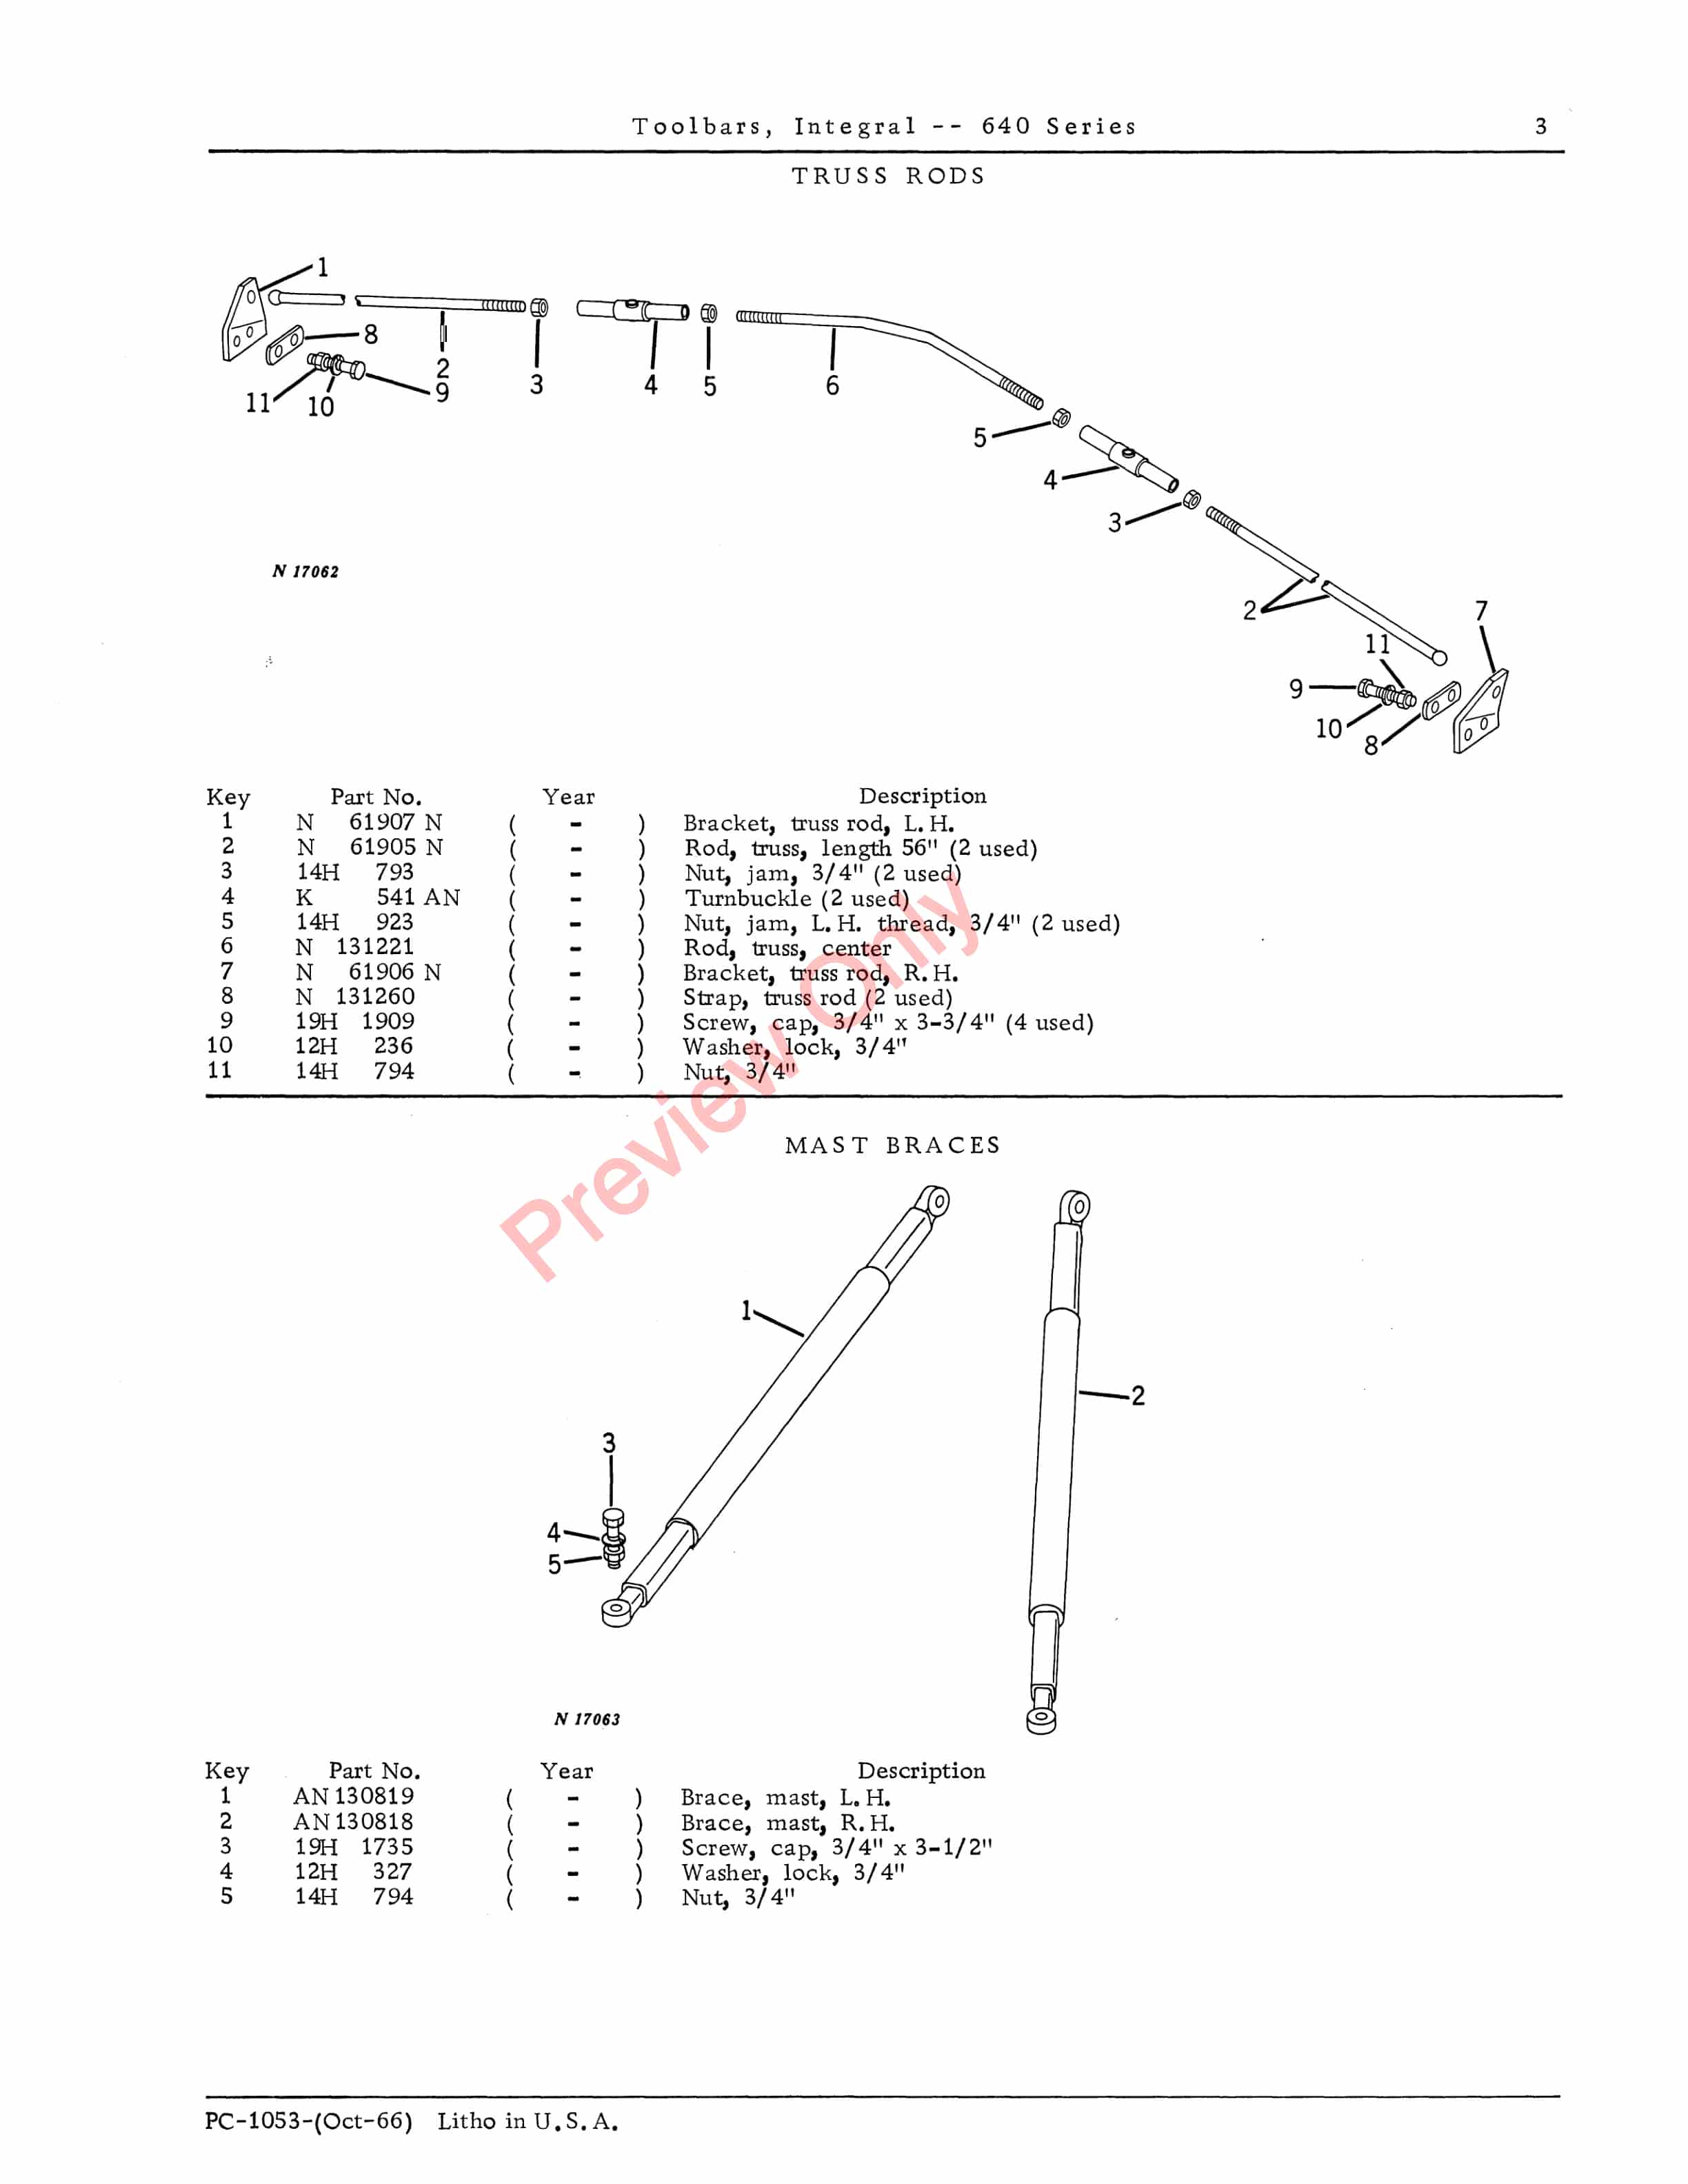 John Deere 640 Series Integral Toolbars Parts Catalog PC1053 01OCT66 5